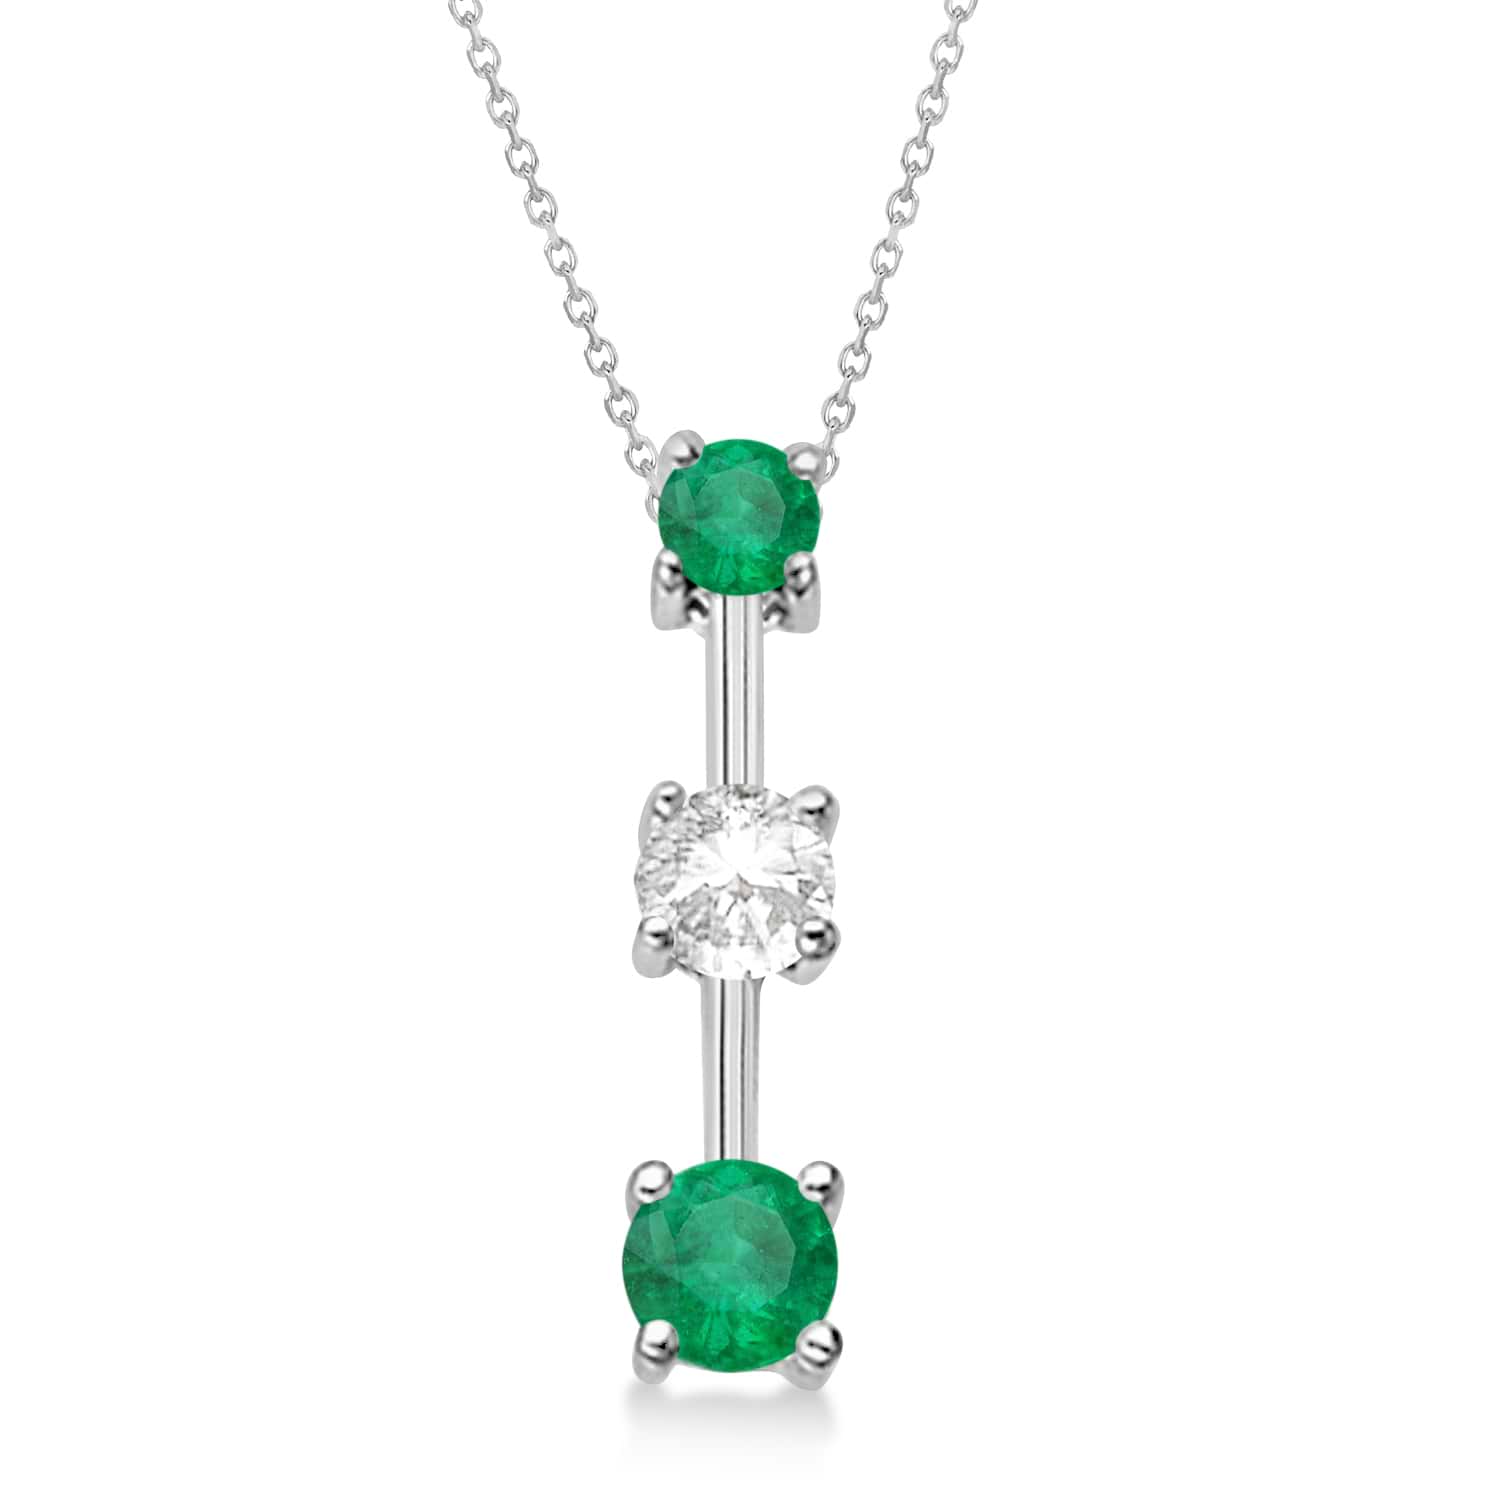 Emeralds & Diamond Three-Stone Necklace 14k White Gold (1.00ct)